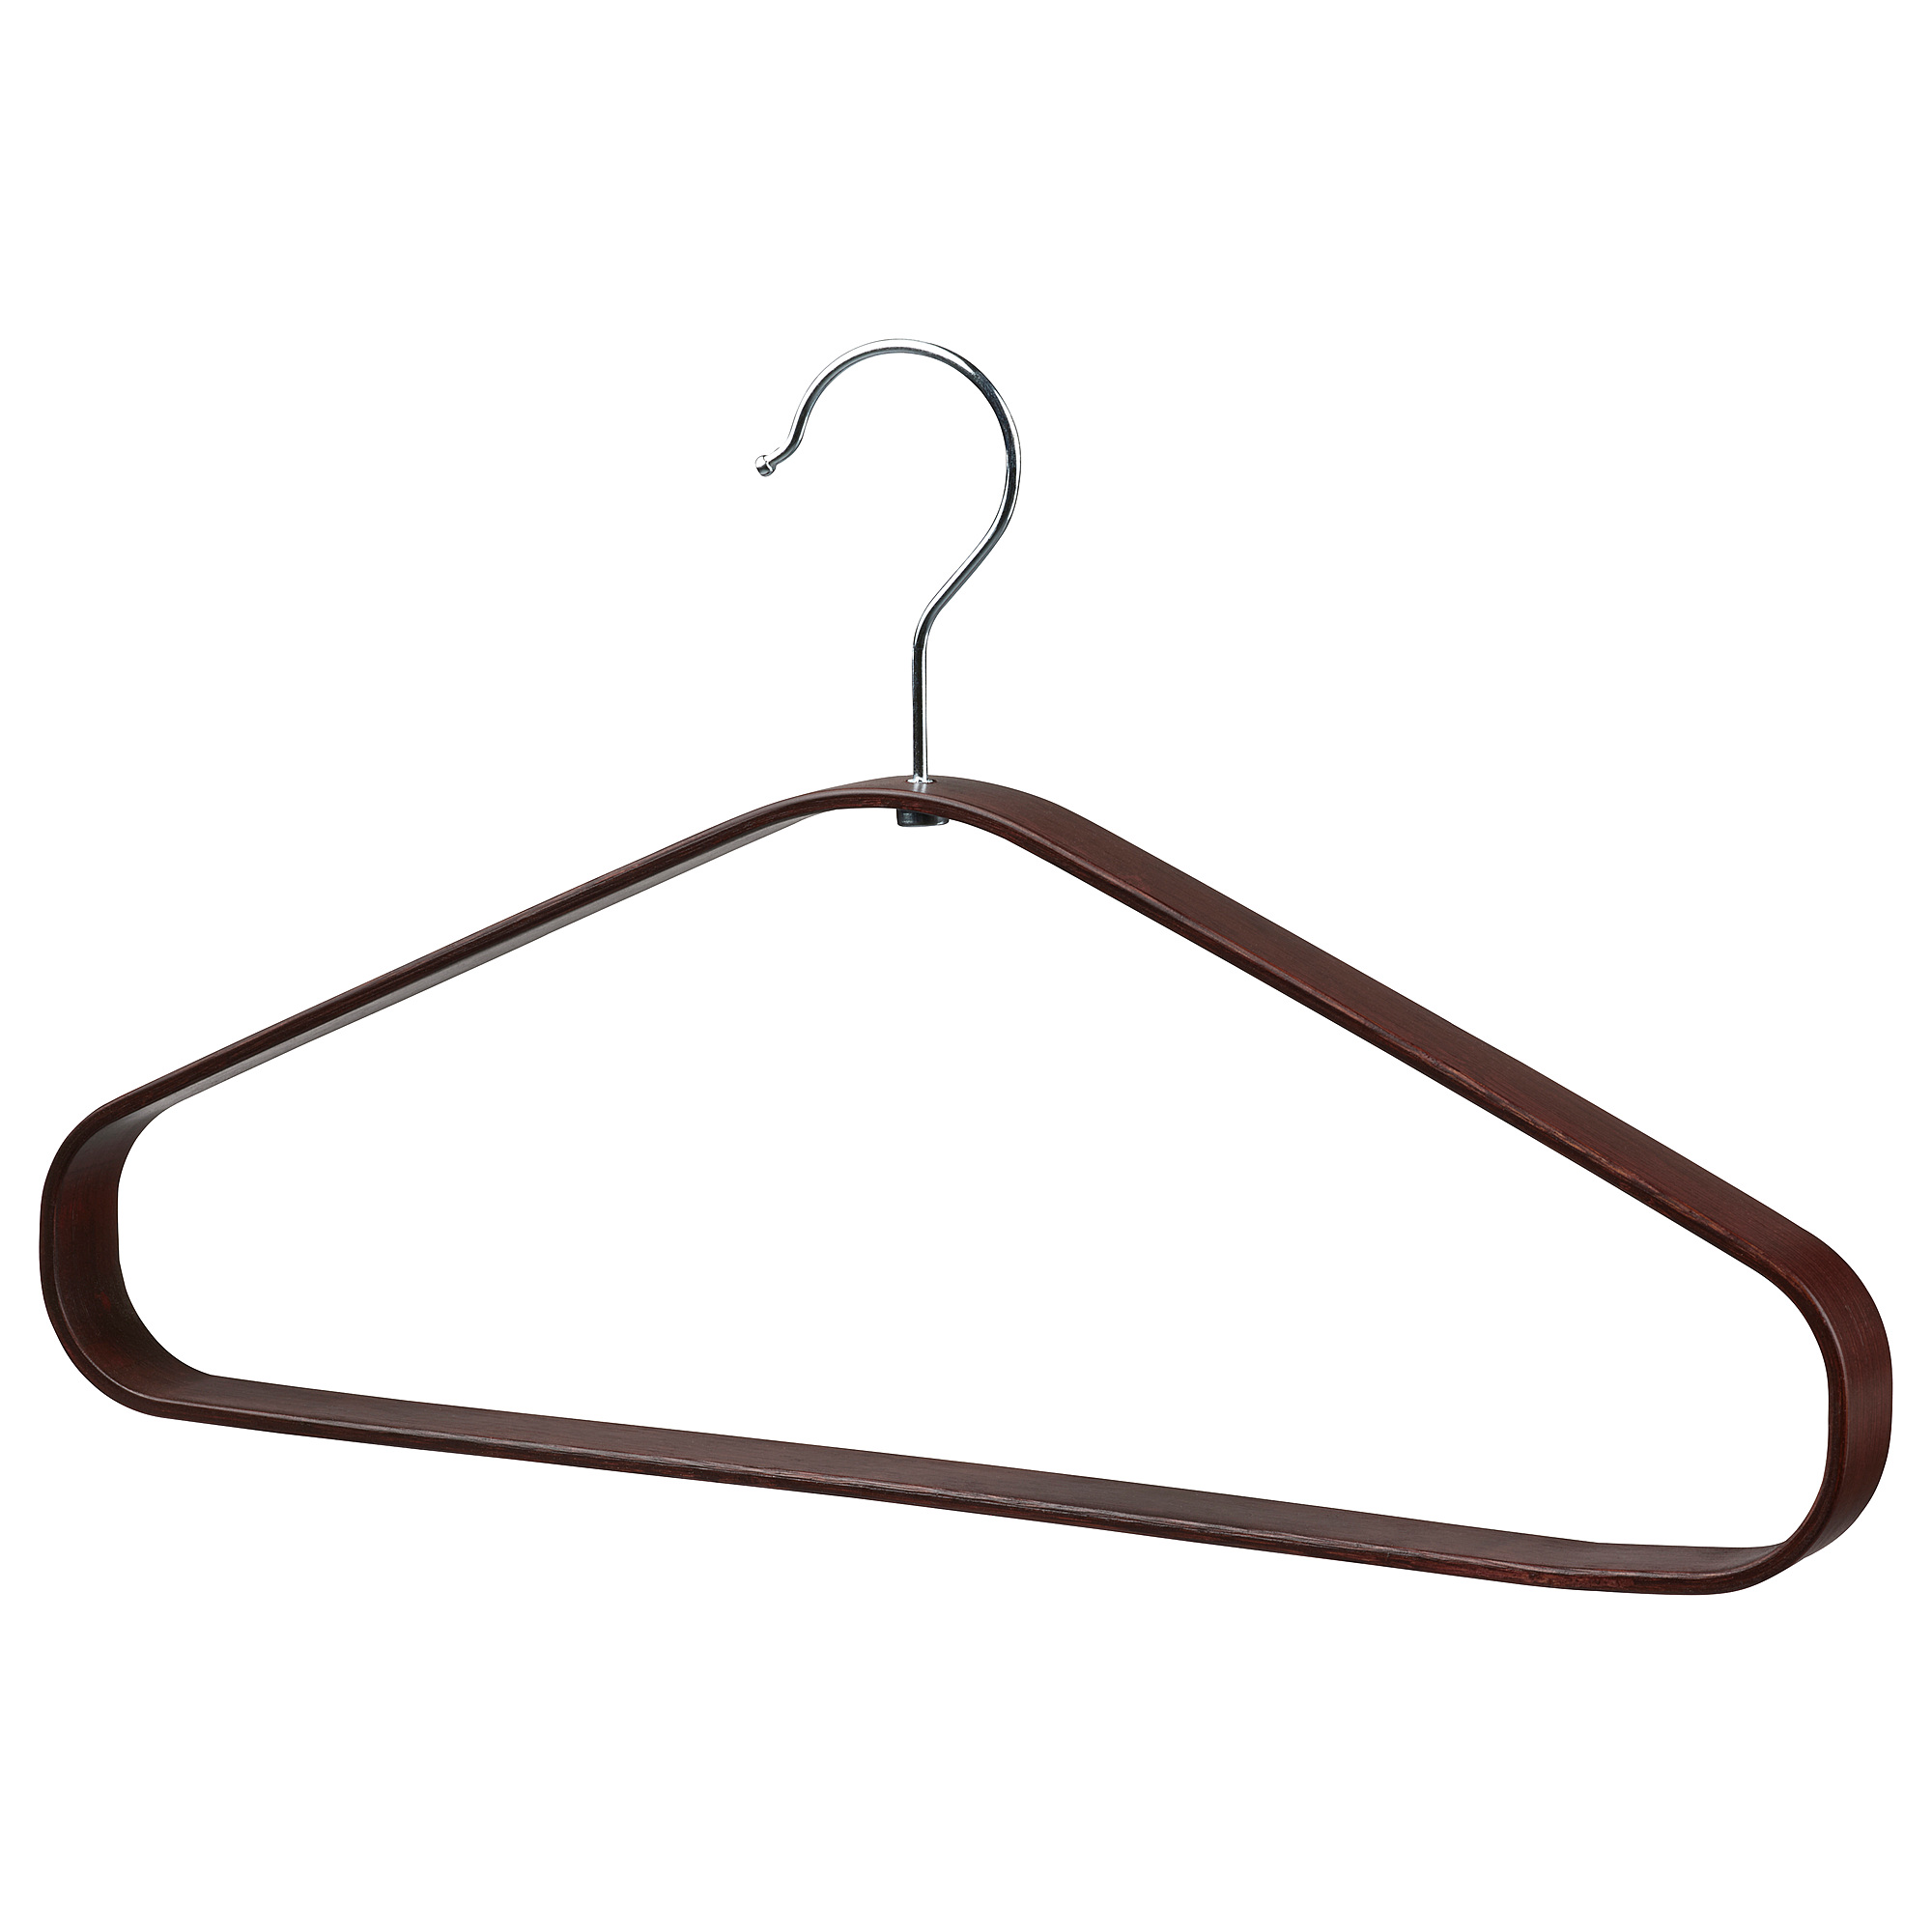 RÅGODLING coat hanger